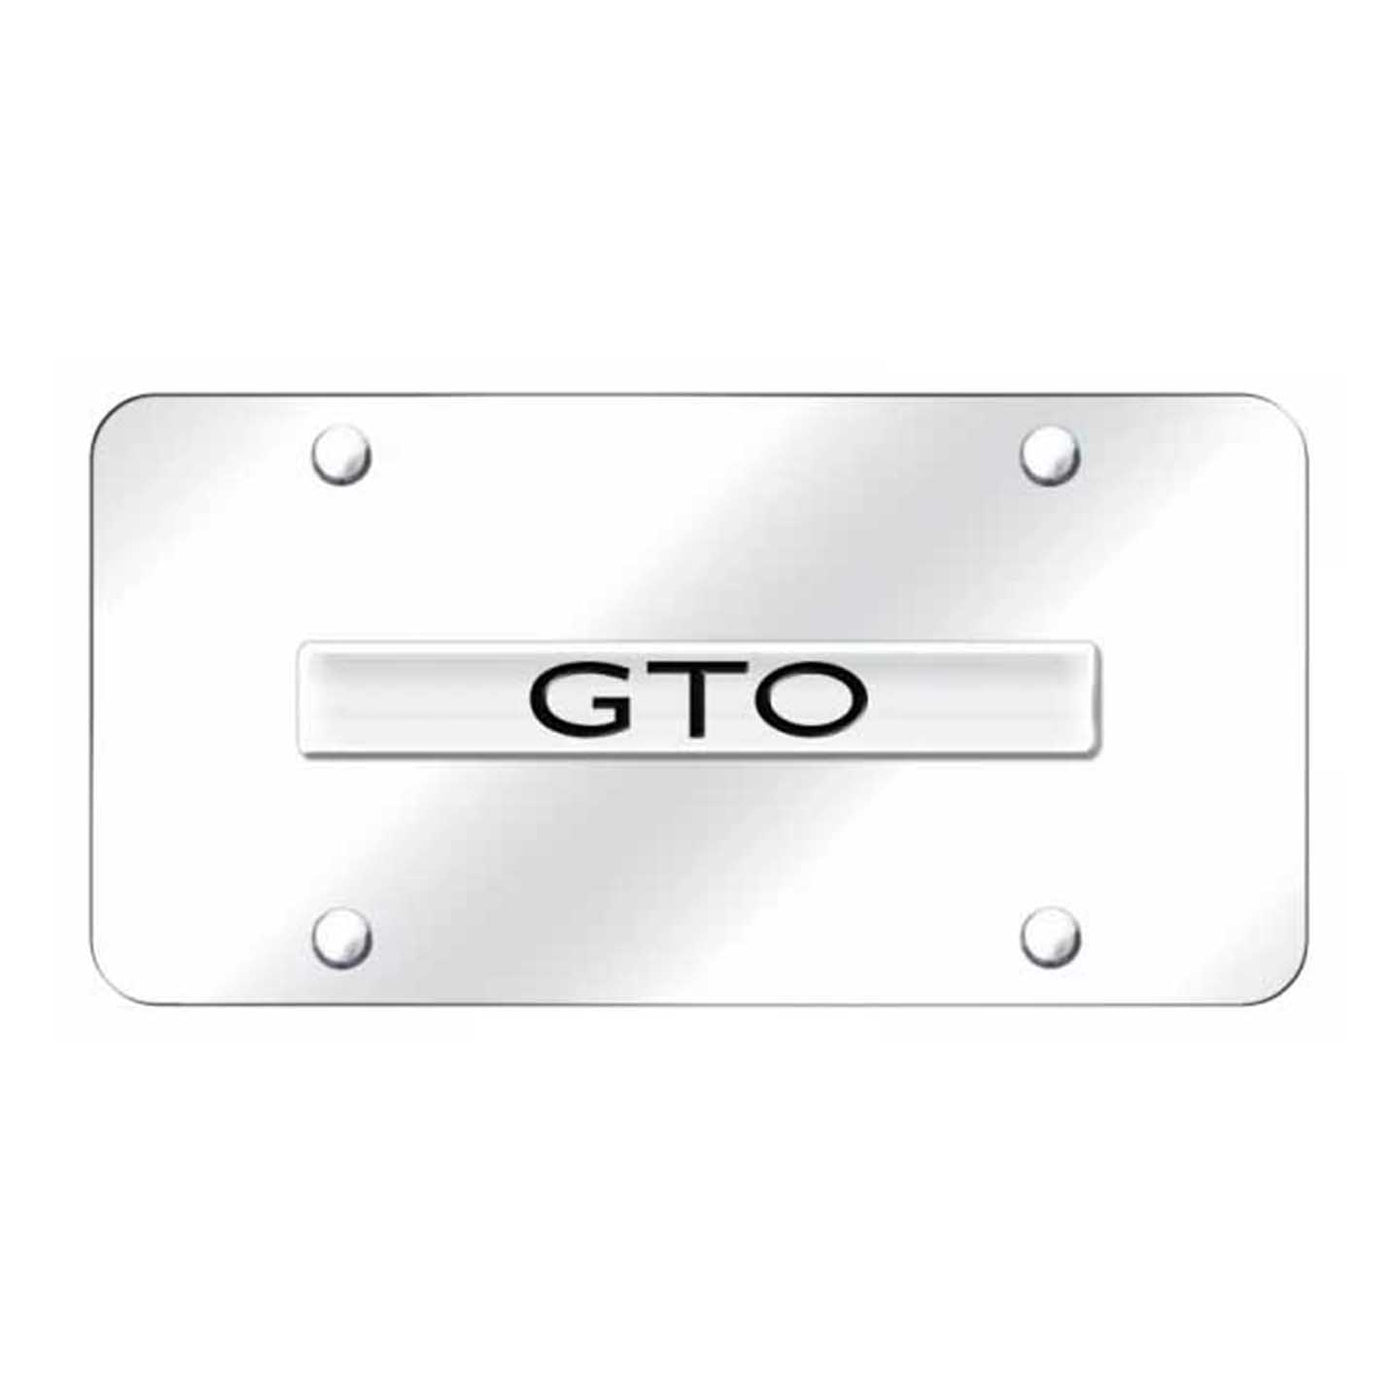 GTO Name License Plate - Chrome on Mirrored